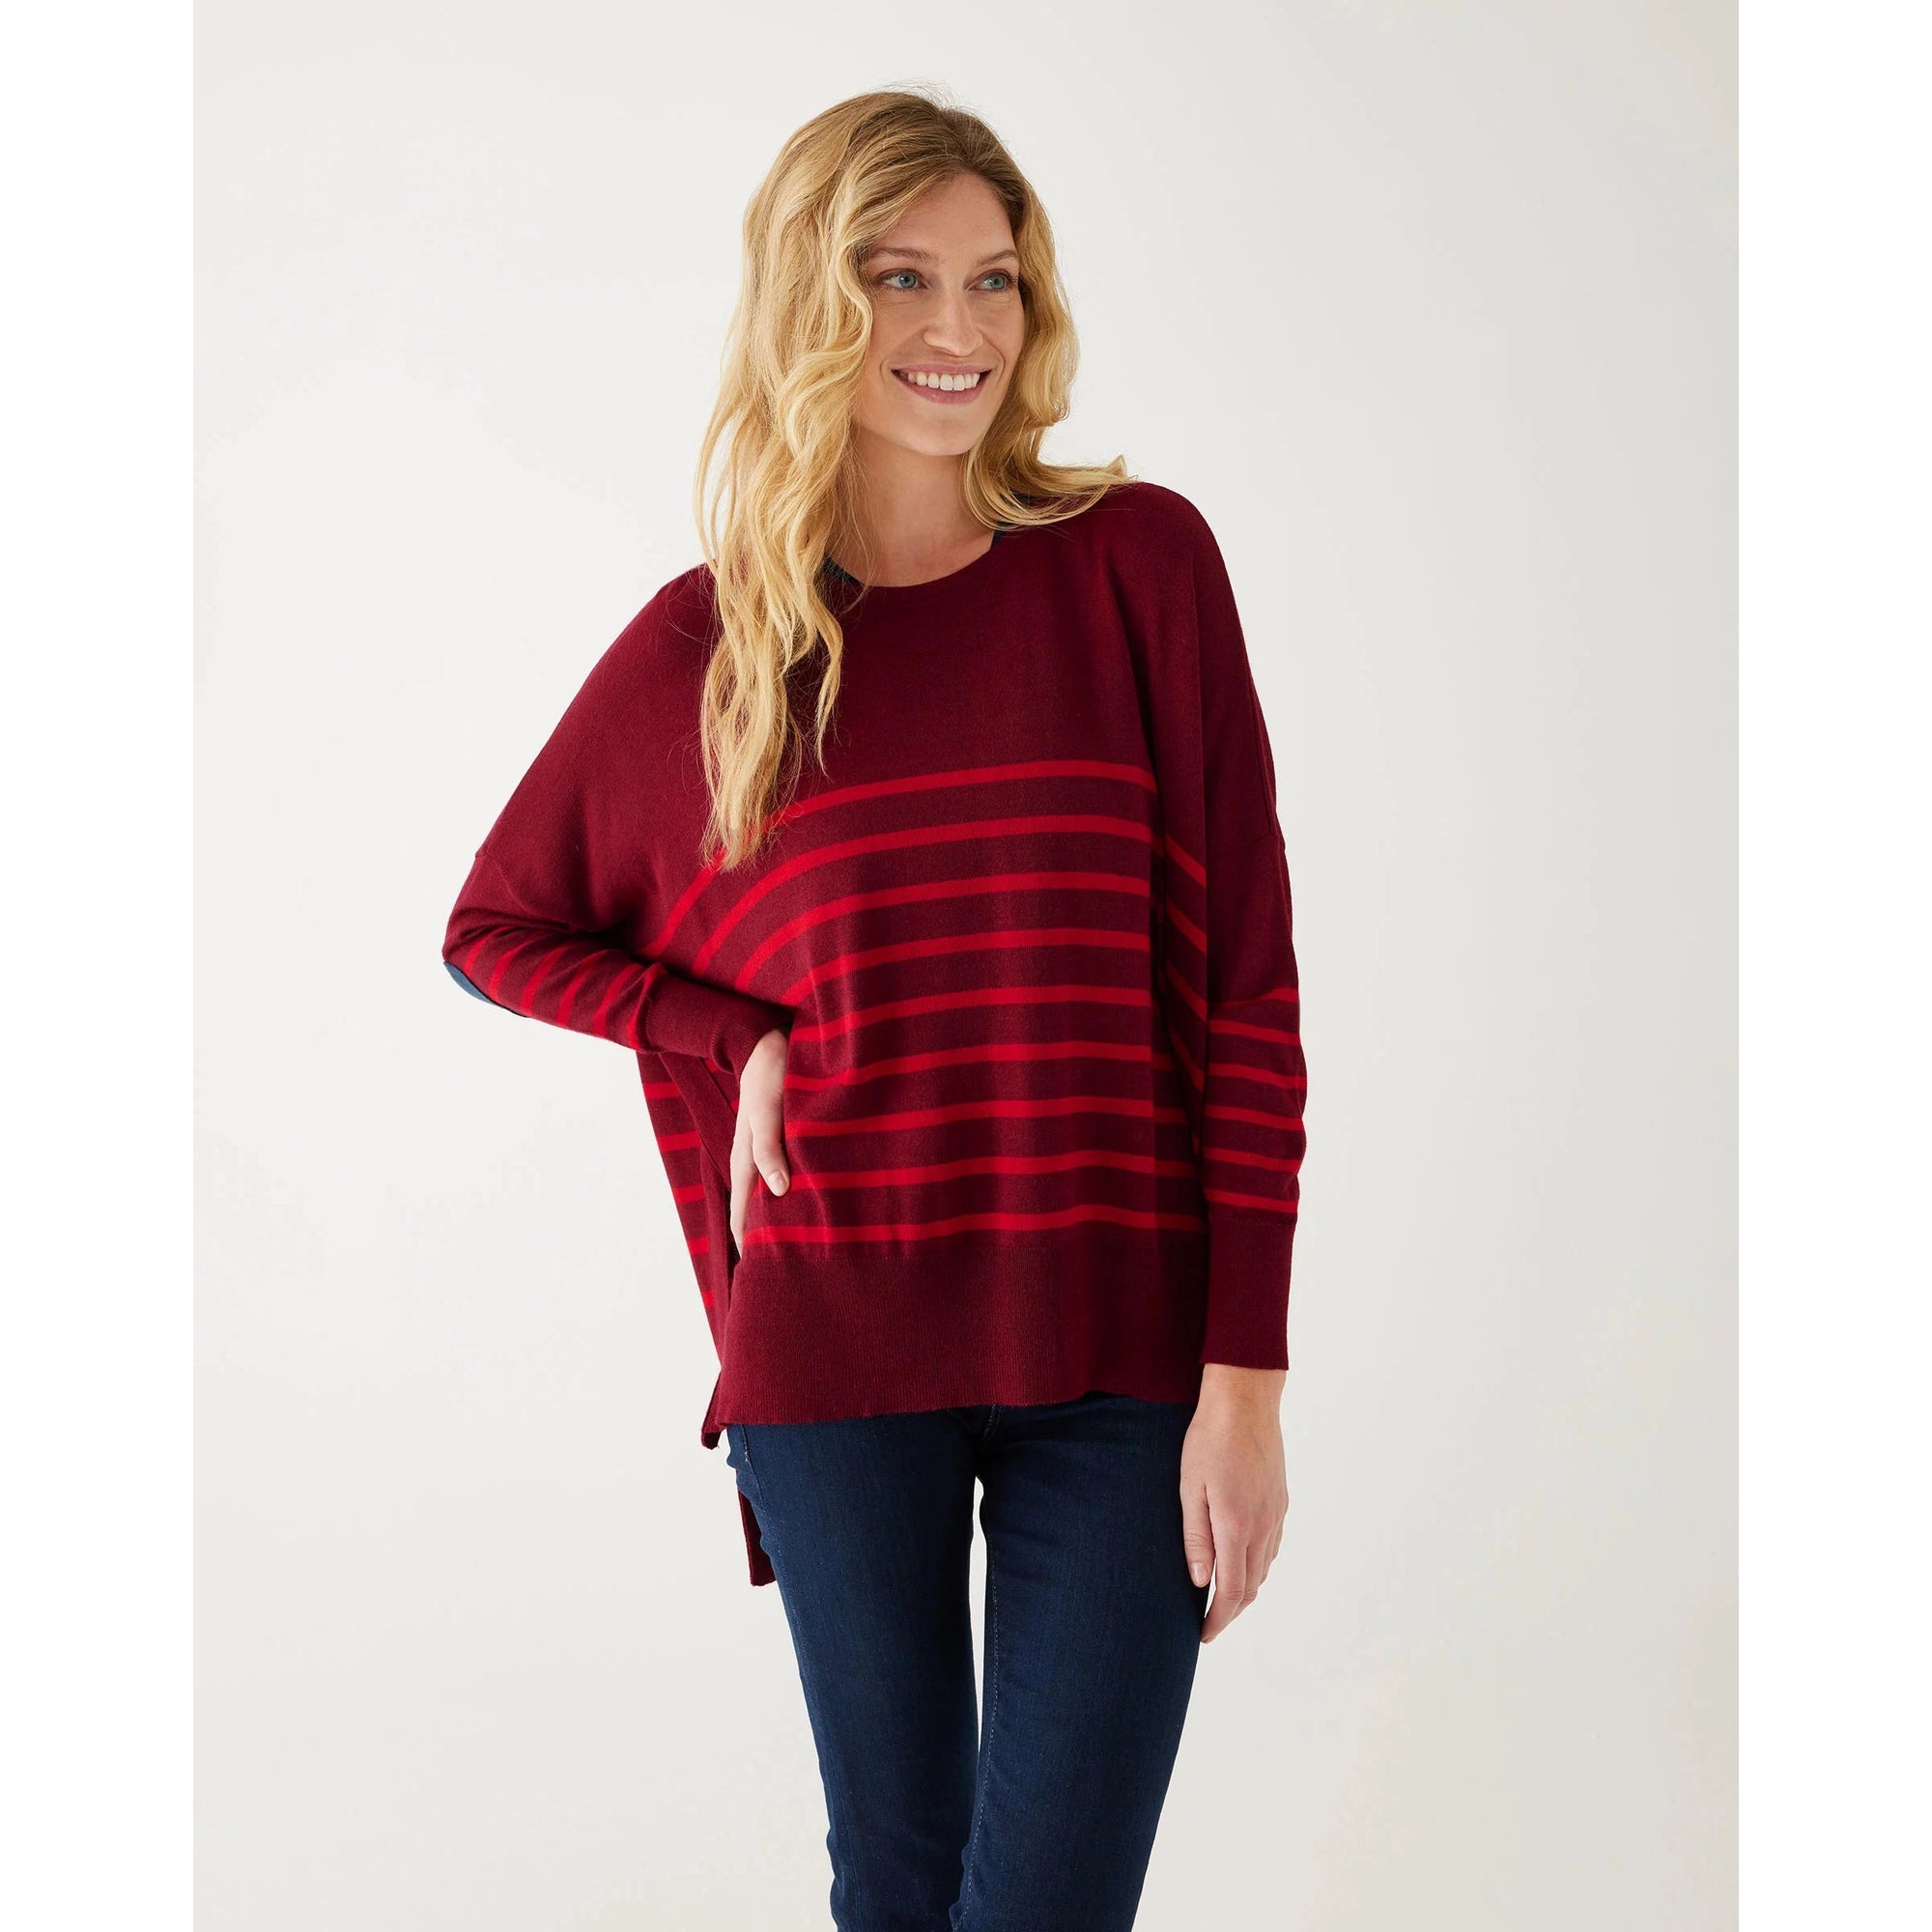 AMOUR SWEATER-Sweater Pullover-MERSEA-ONE-CHERRY WINE-Coriander